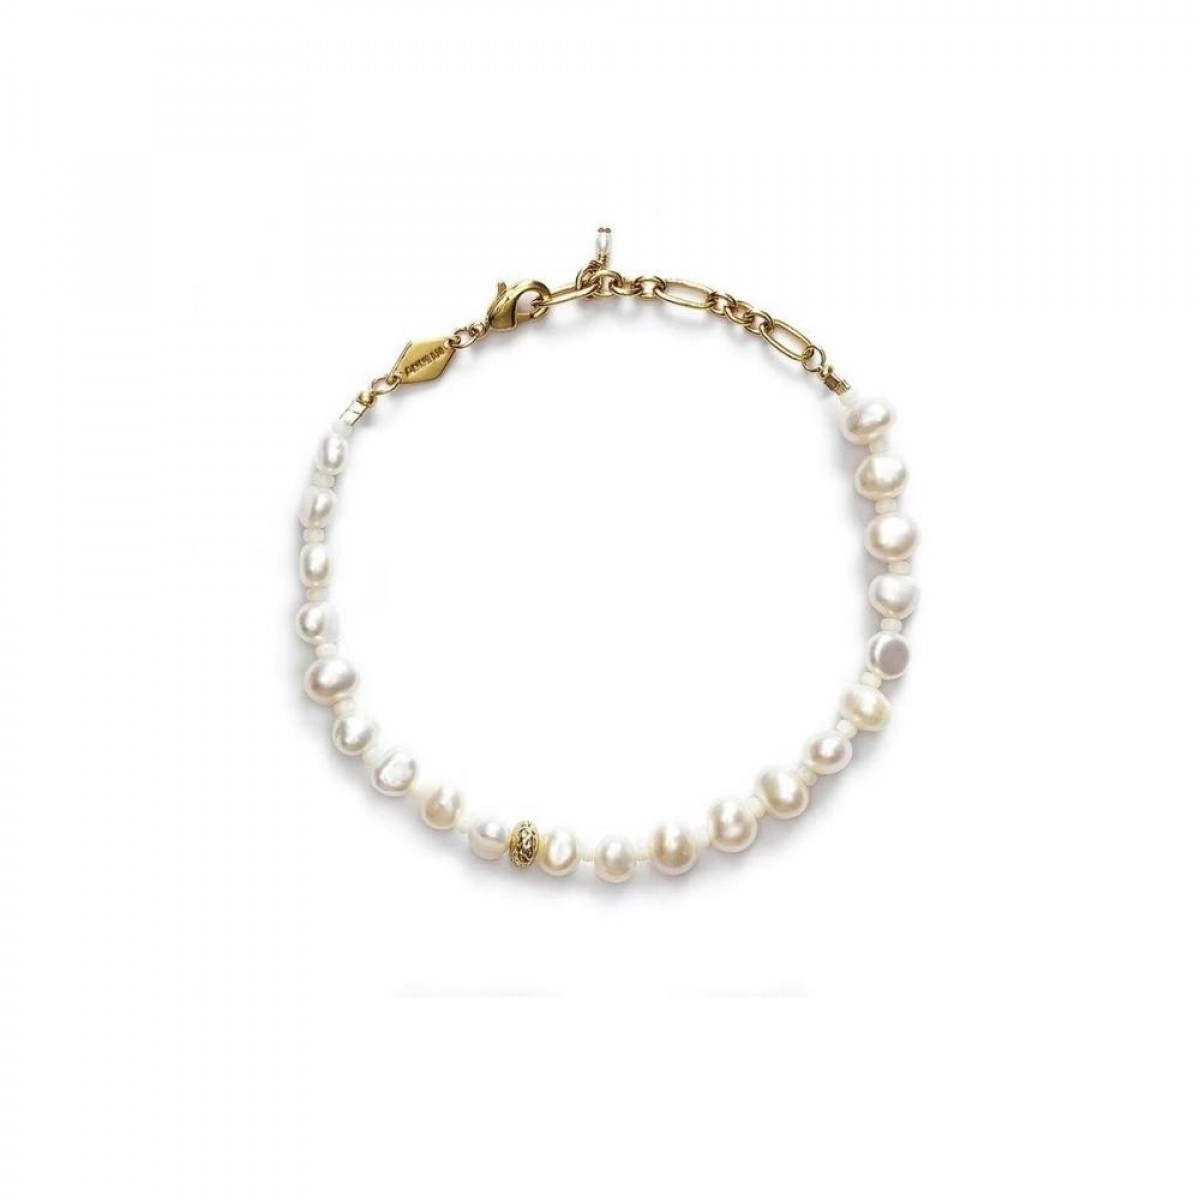 anni lu stellar pearly bracelet - gold - front